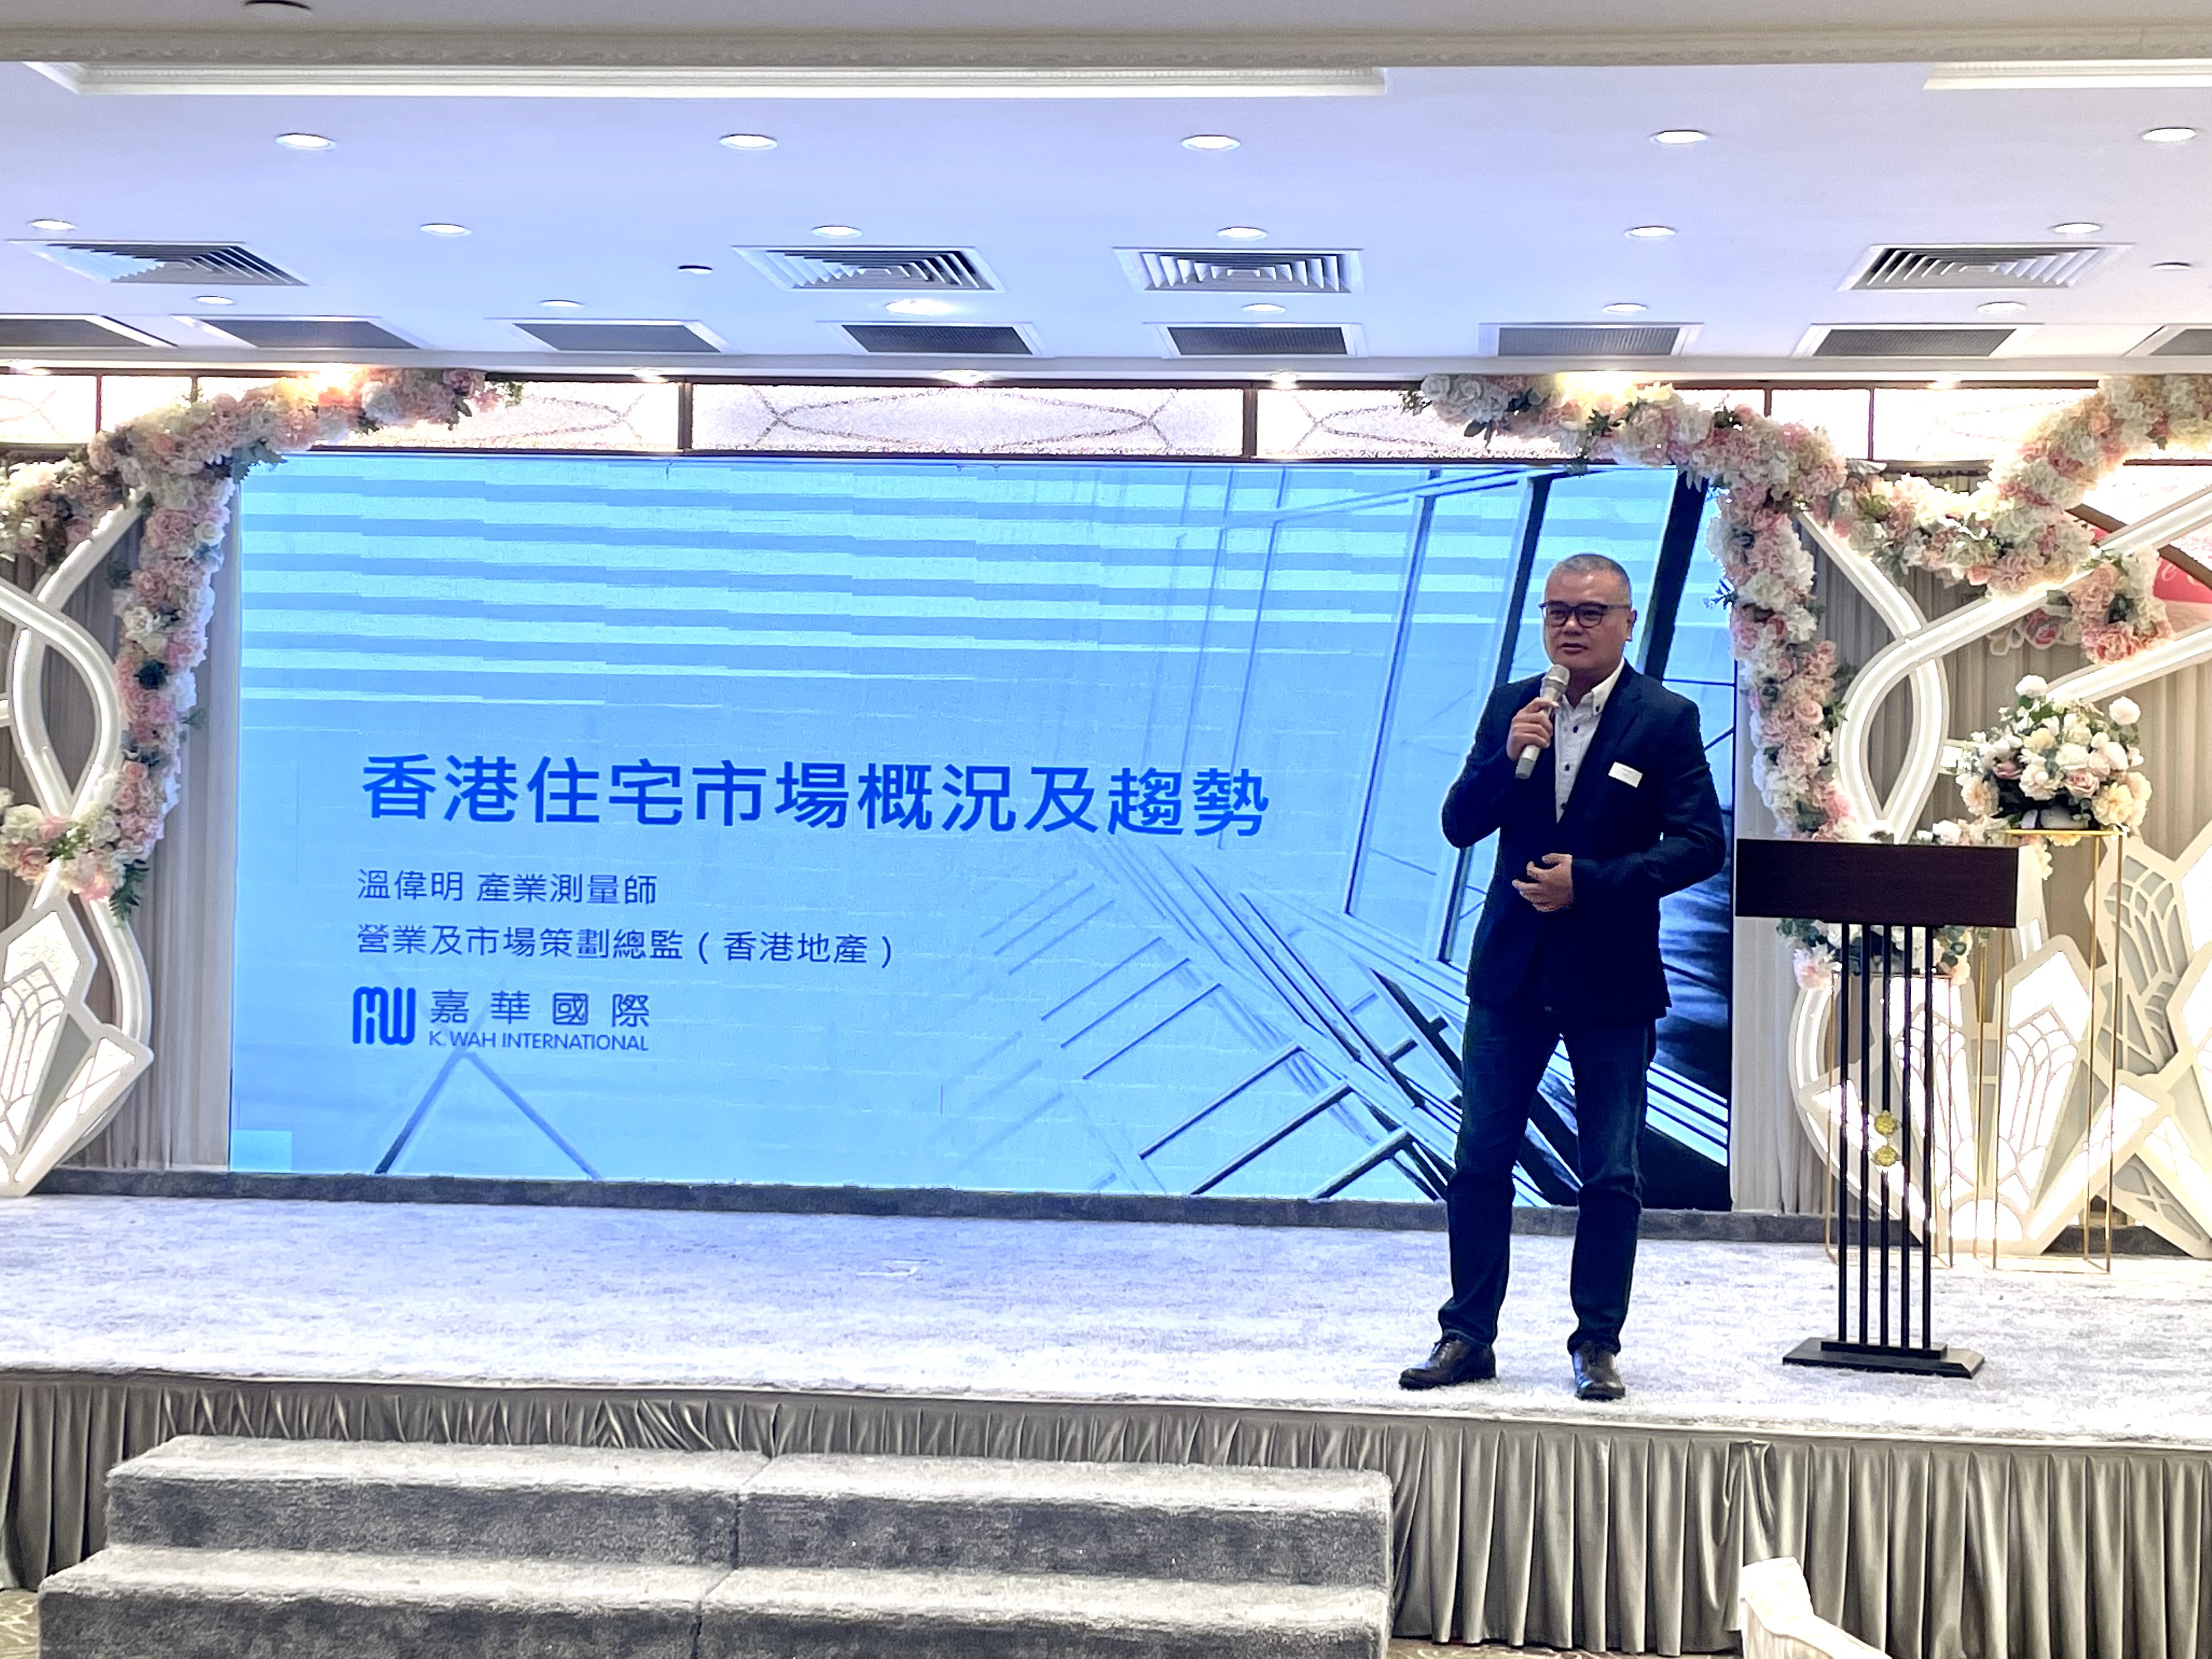 HKGCPF successfully held the Talk「疫情第五波後的樓市」 on 2 June 2022